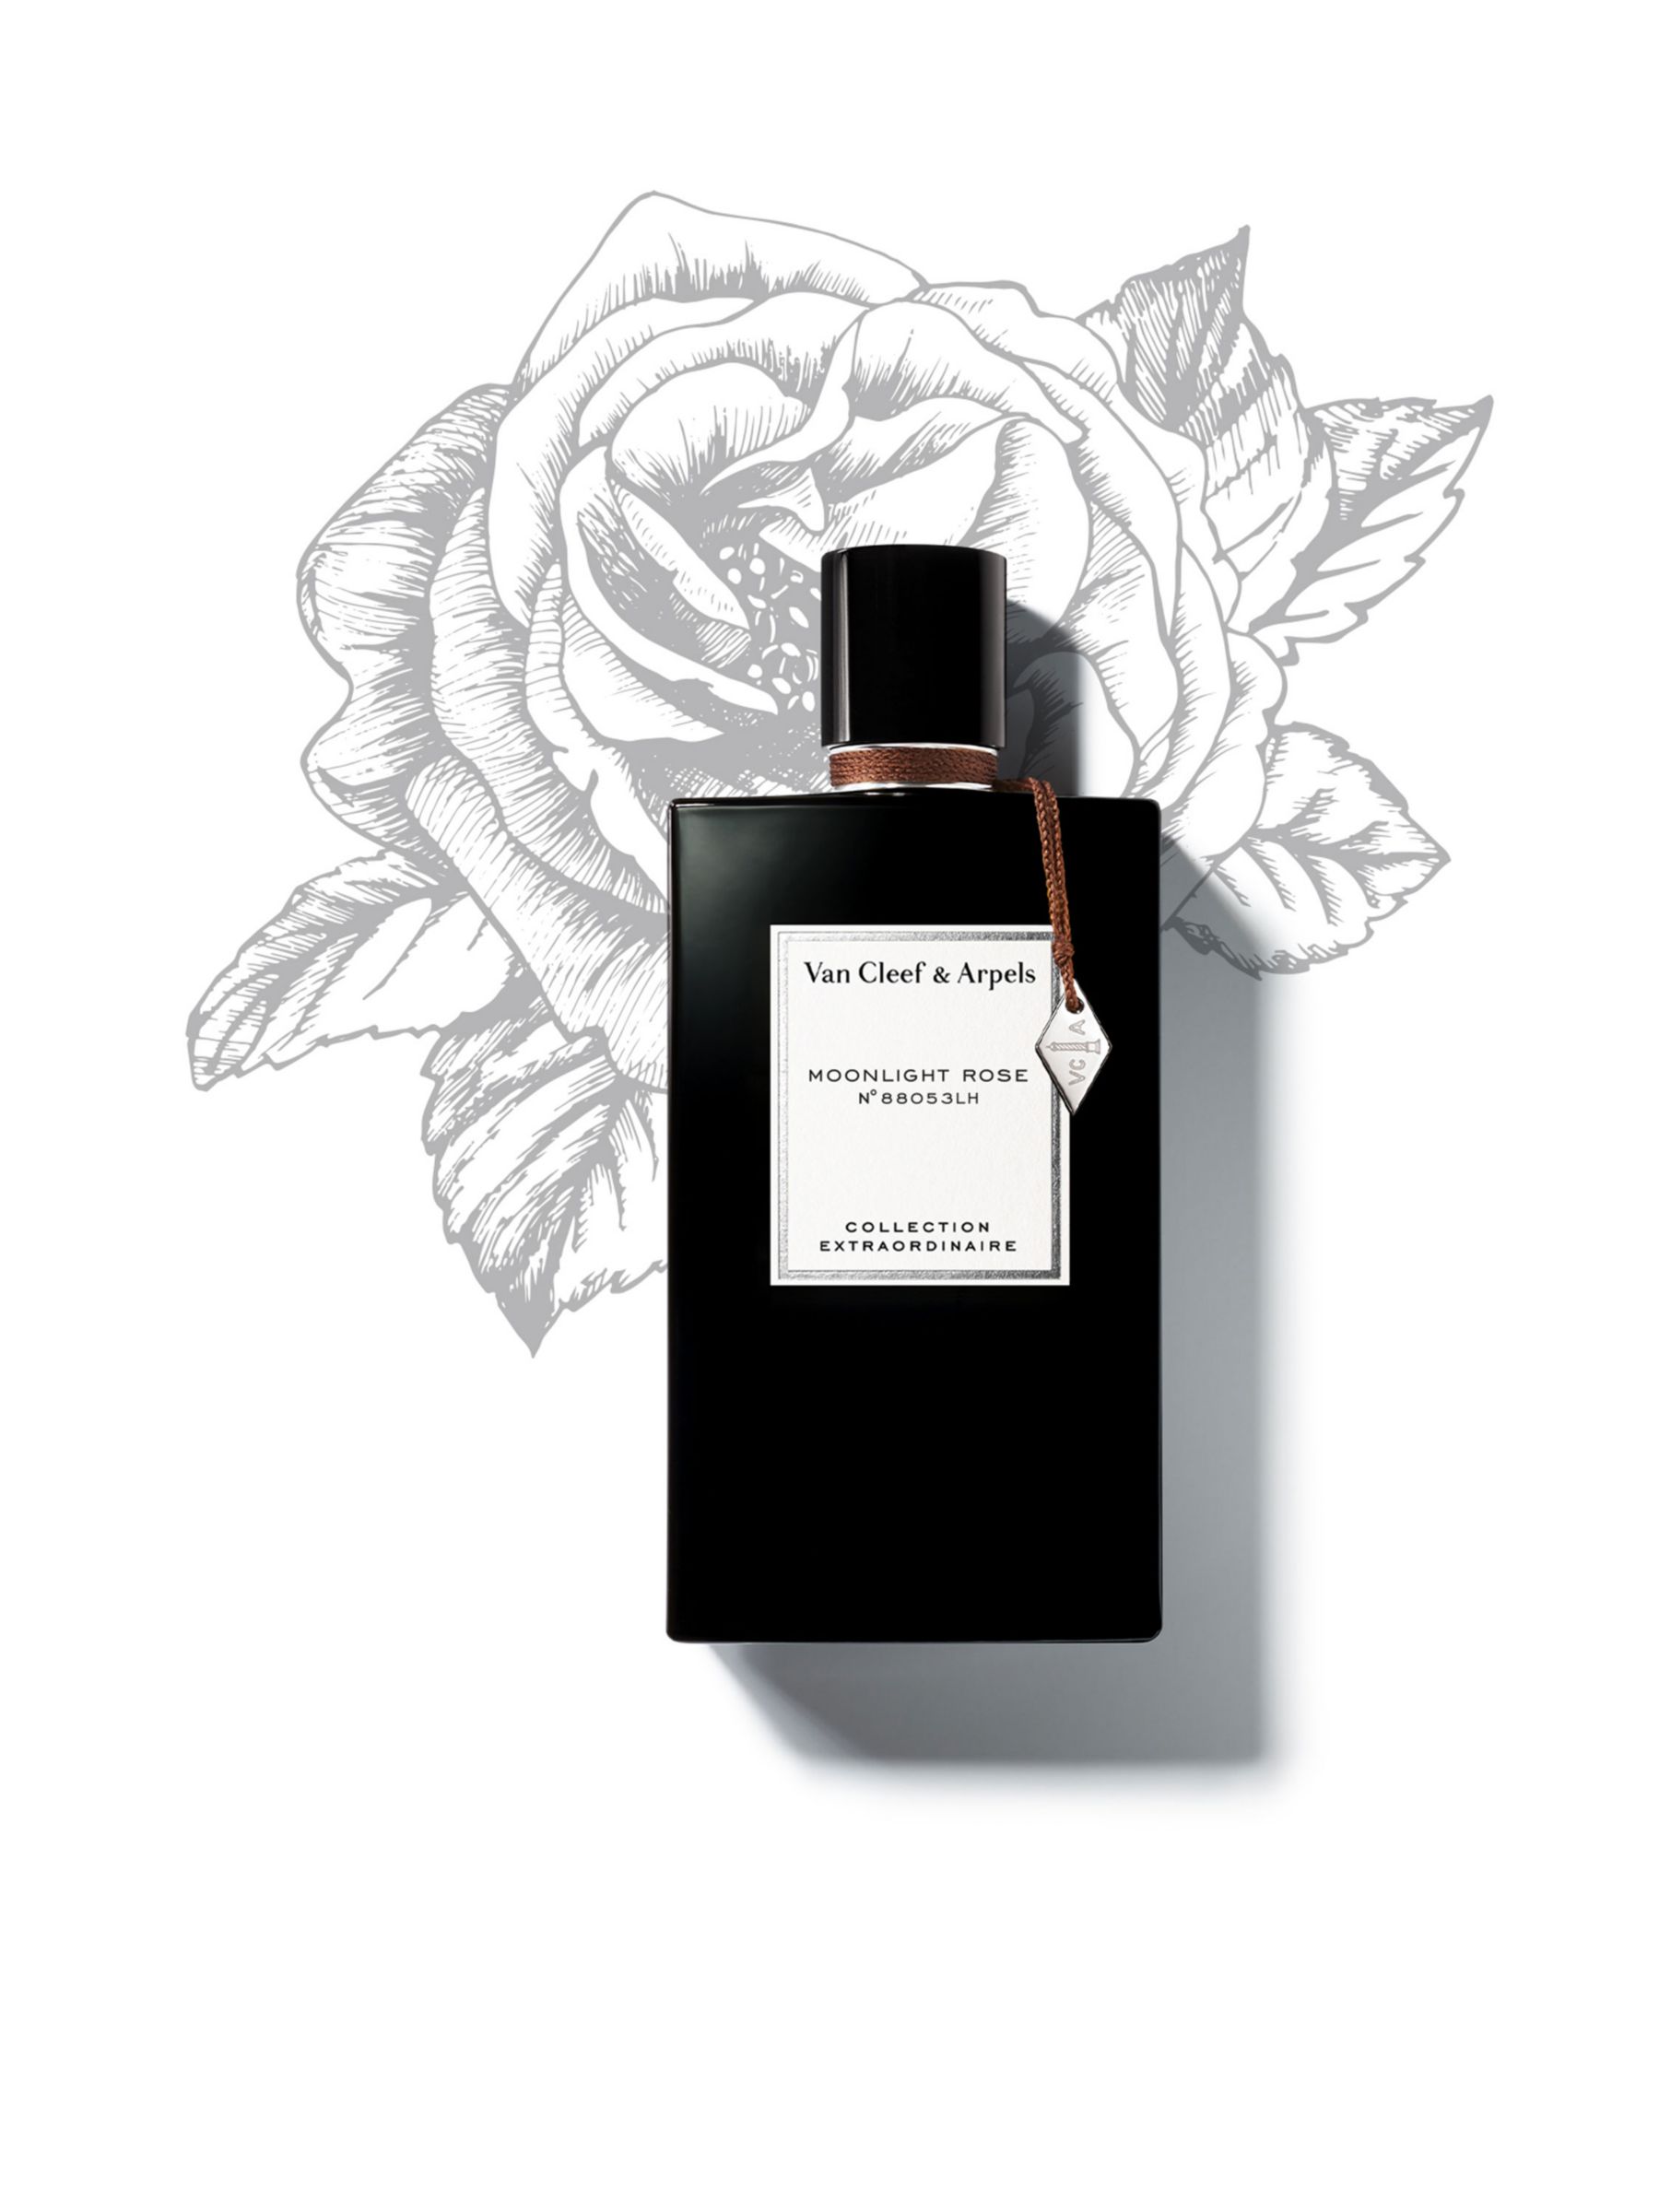 Van Cleef & Arpels Moonlight Rose Eau de Parfum, 75ml 3